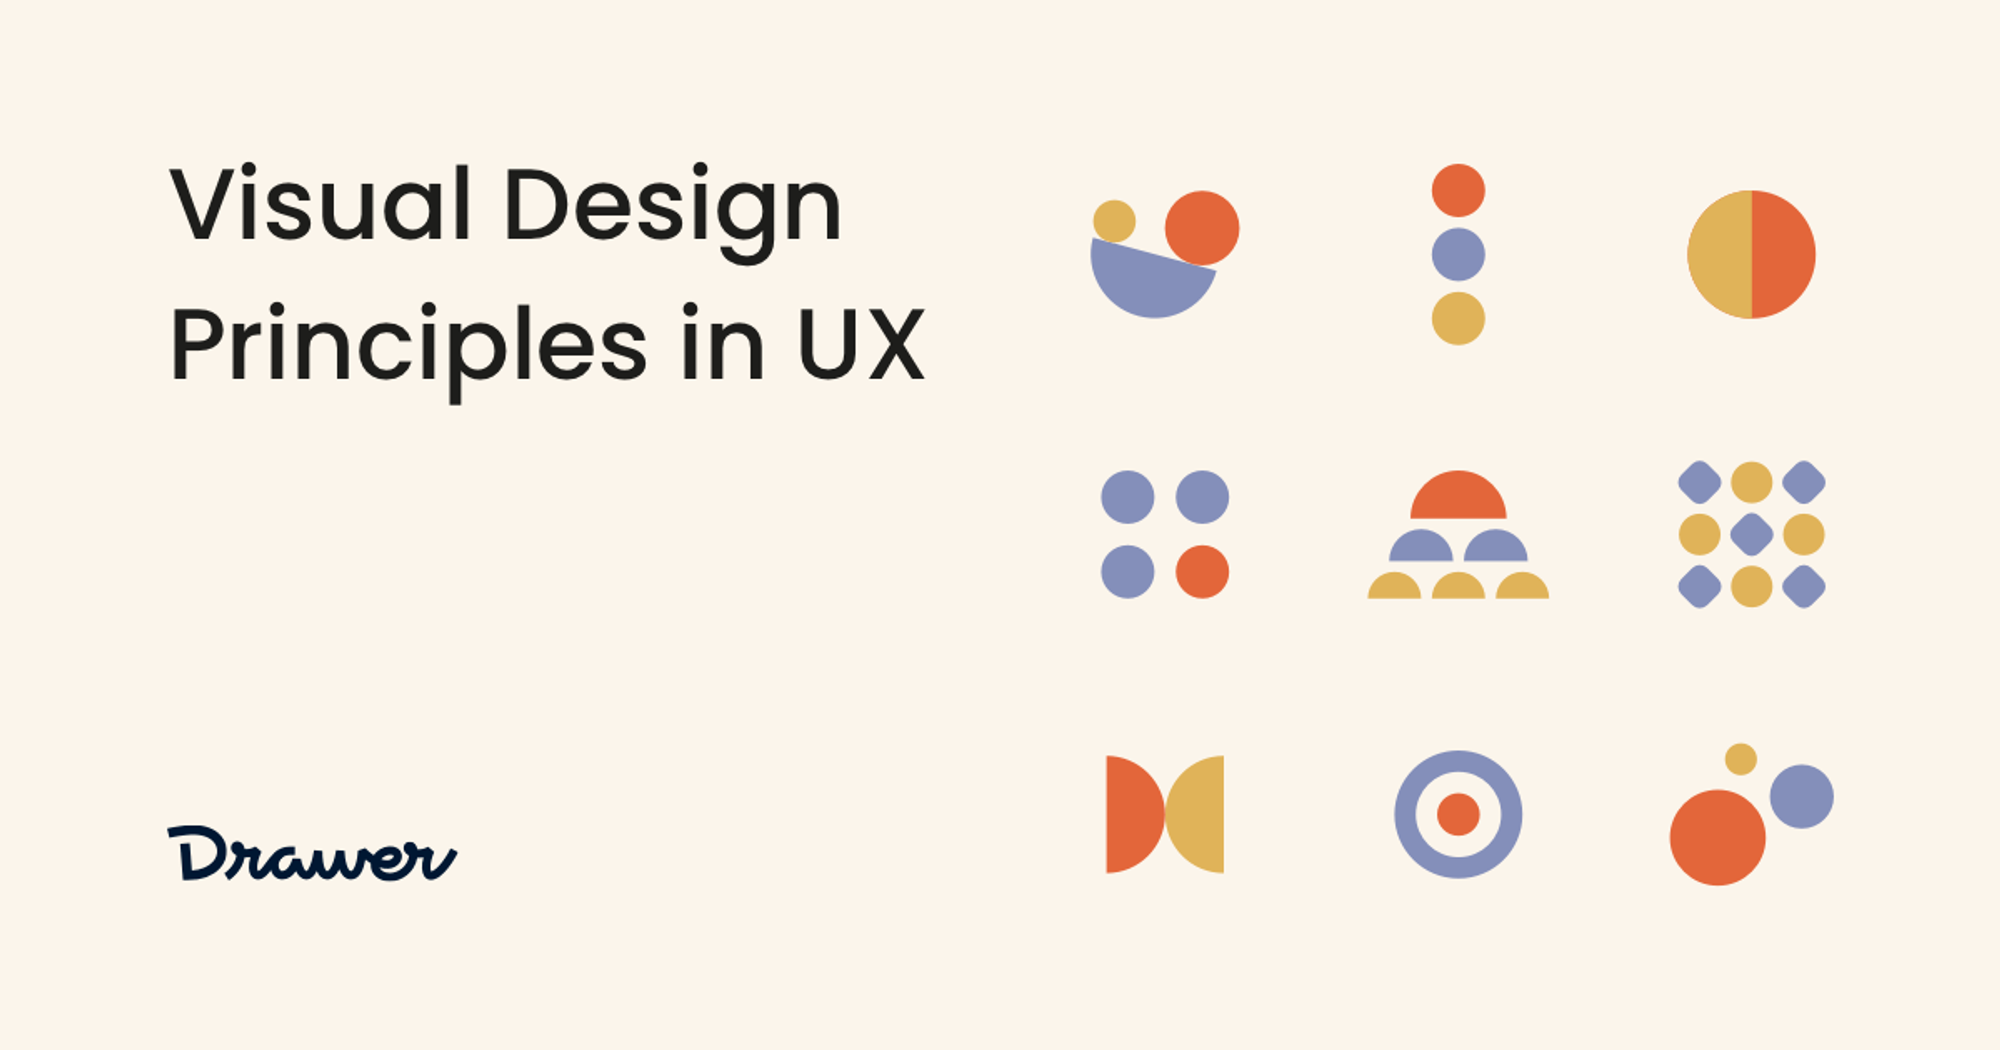 Drawer Blog - Visual Design Principles in UX